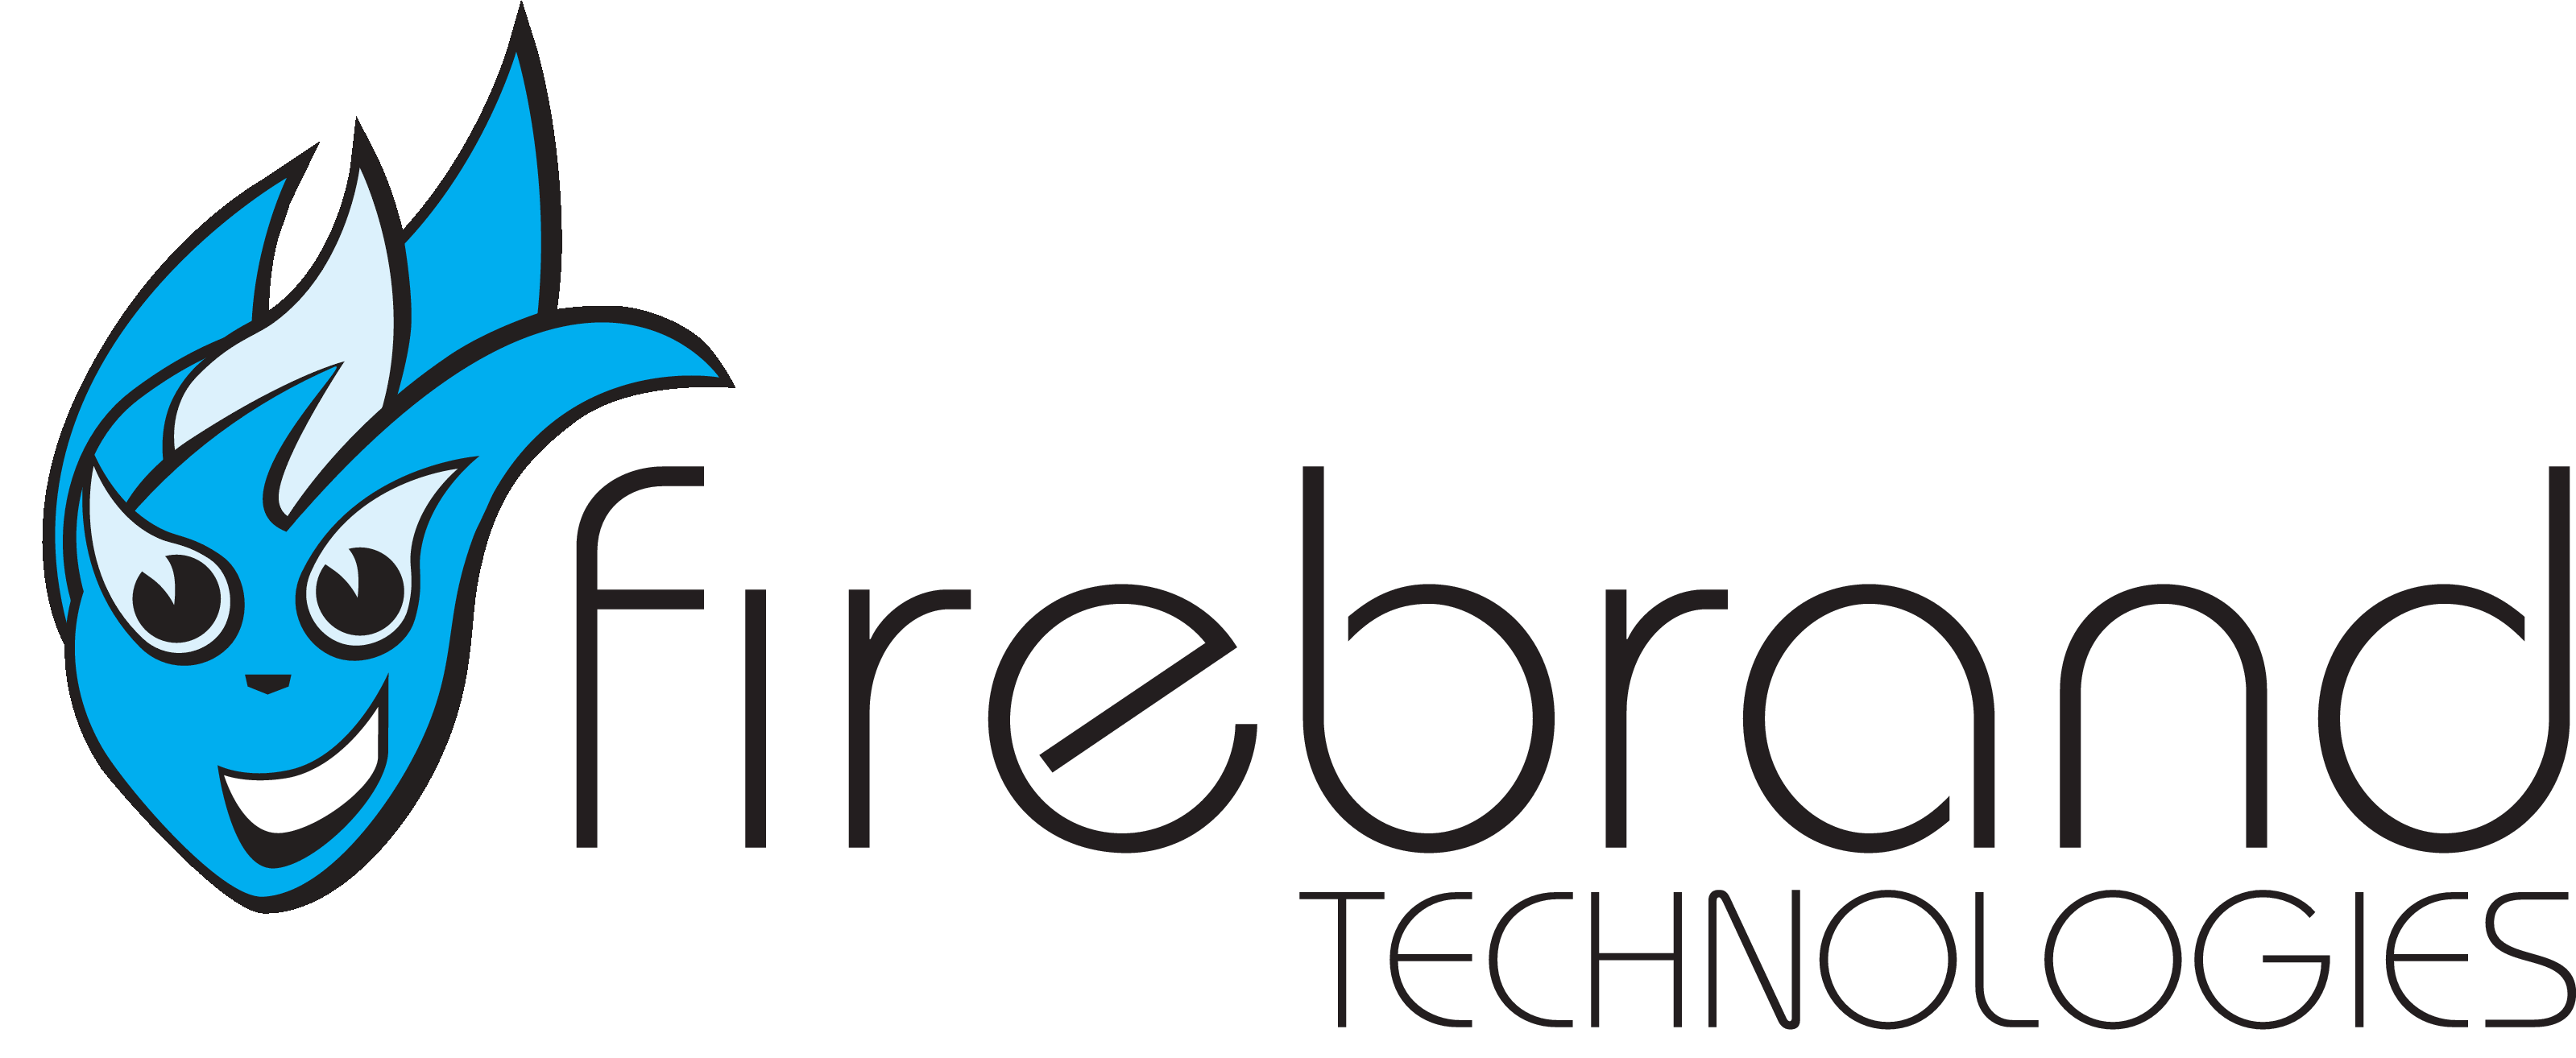 Firebrand Technologies logo